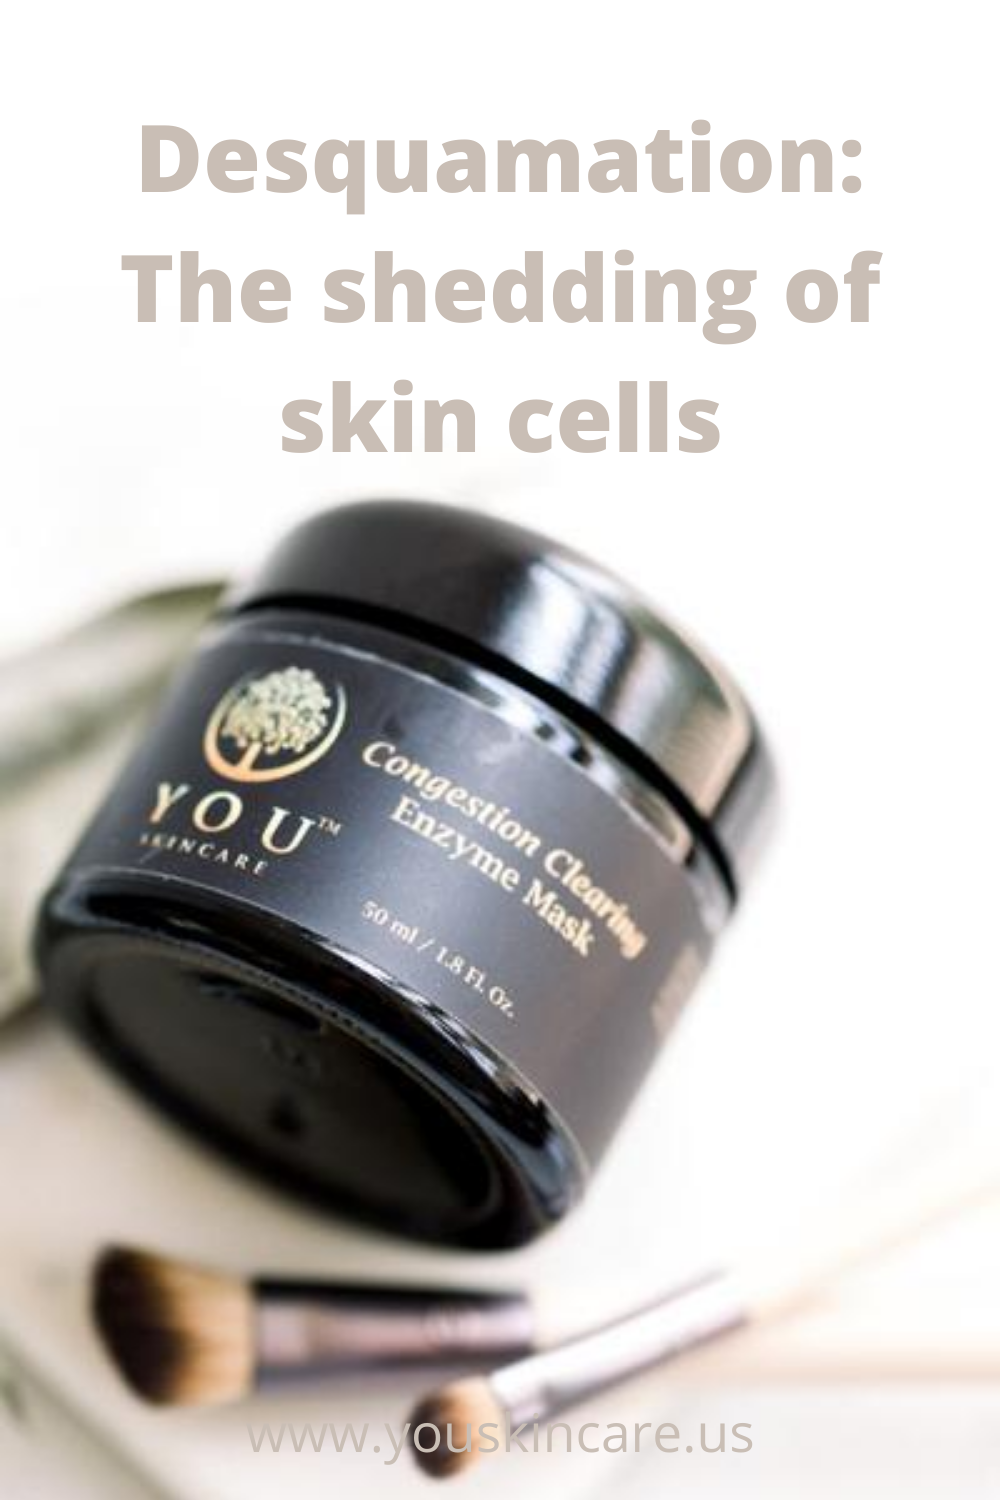 Desquamation: The shedding of skin cells